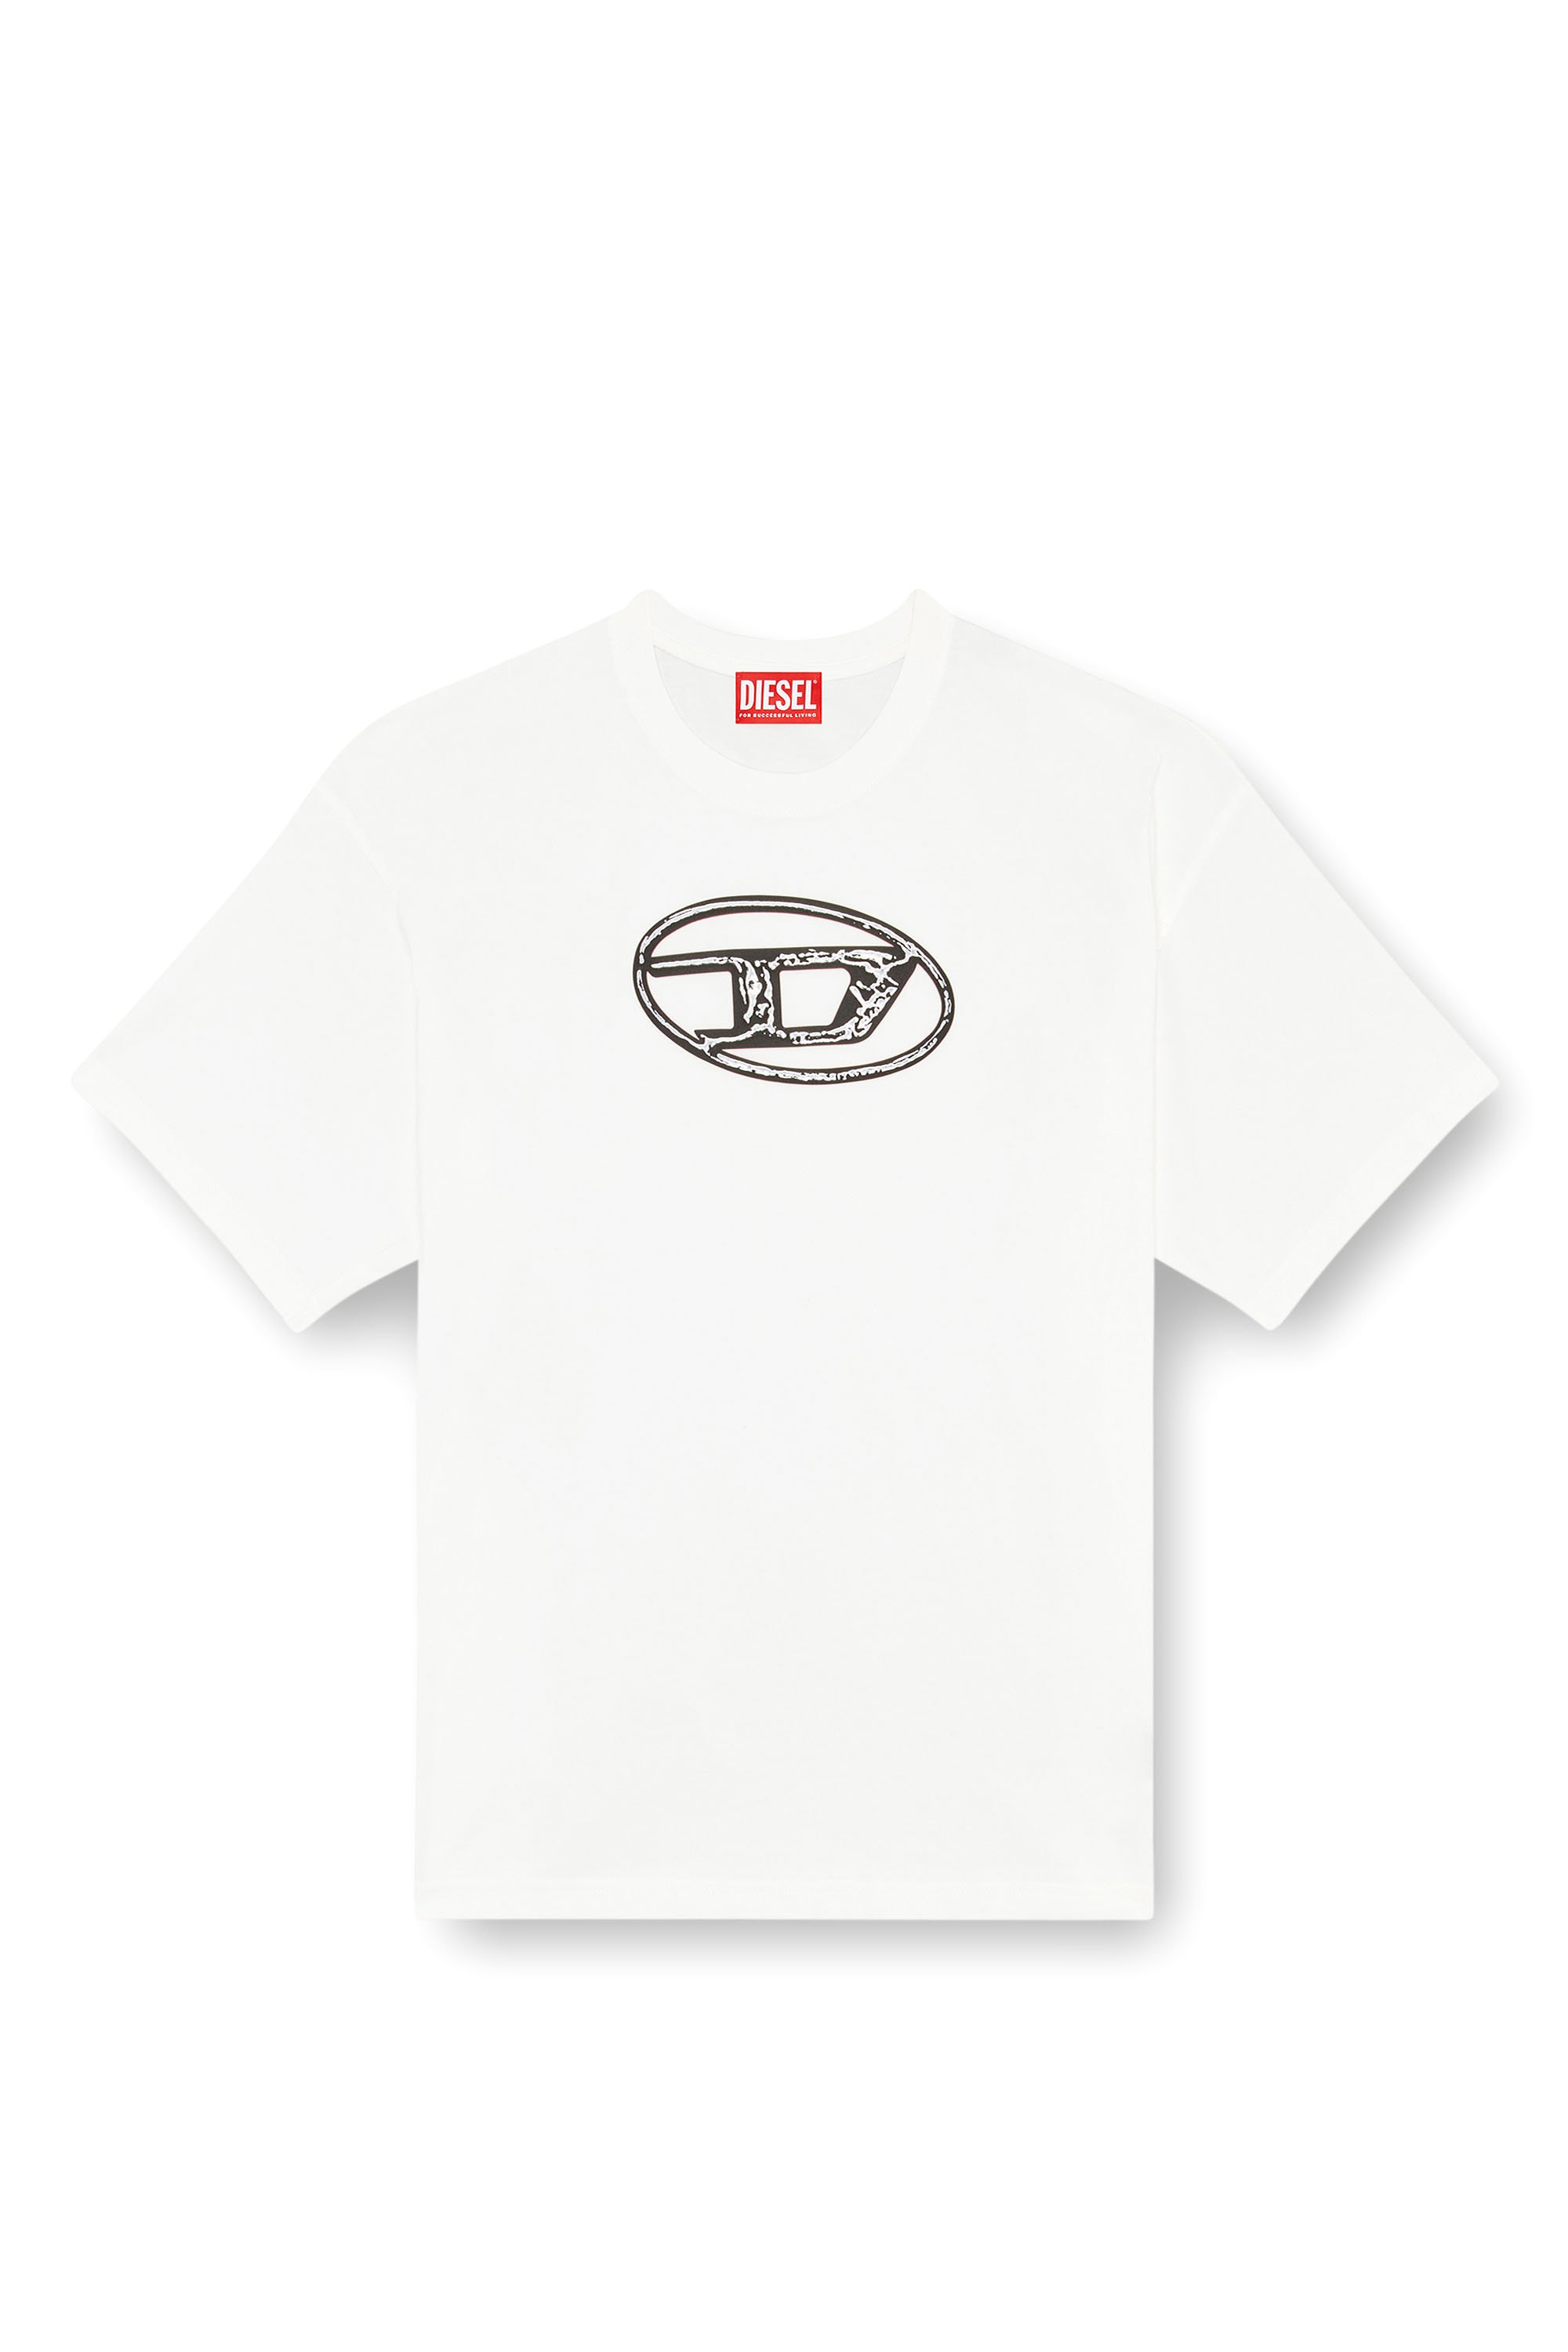 Diesel - T-BOXT-Q22, Herren Verblasstes T-Shirt mit Oval D-Print in Weiss - Image 3